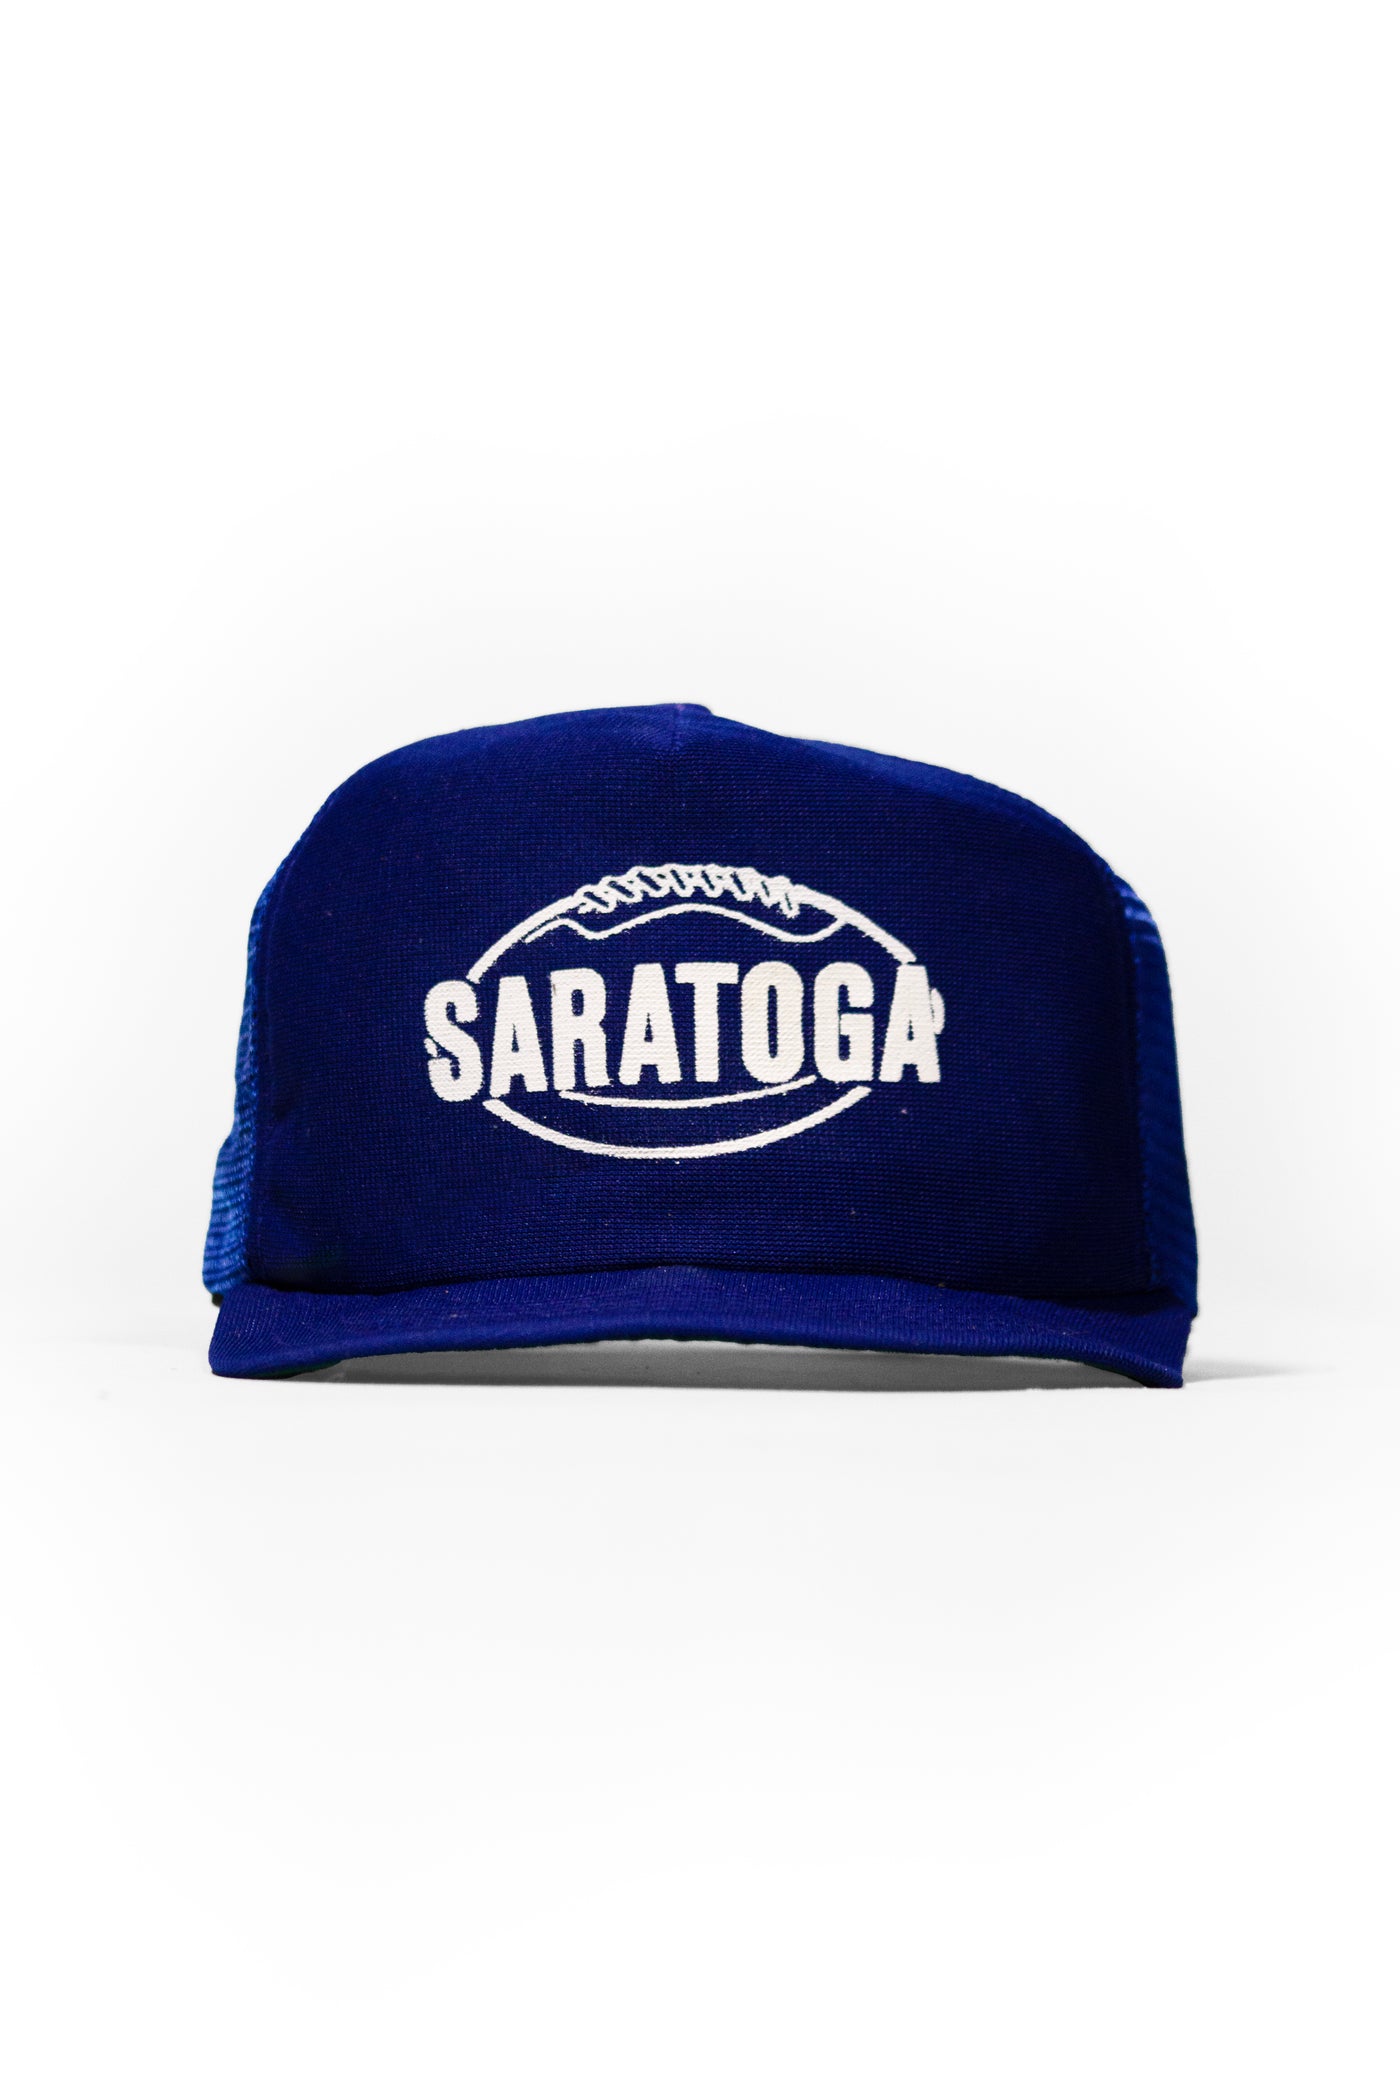 Vintage 80s Saratoga Football Trucker Hat